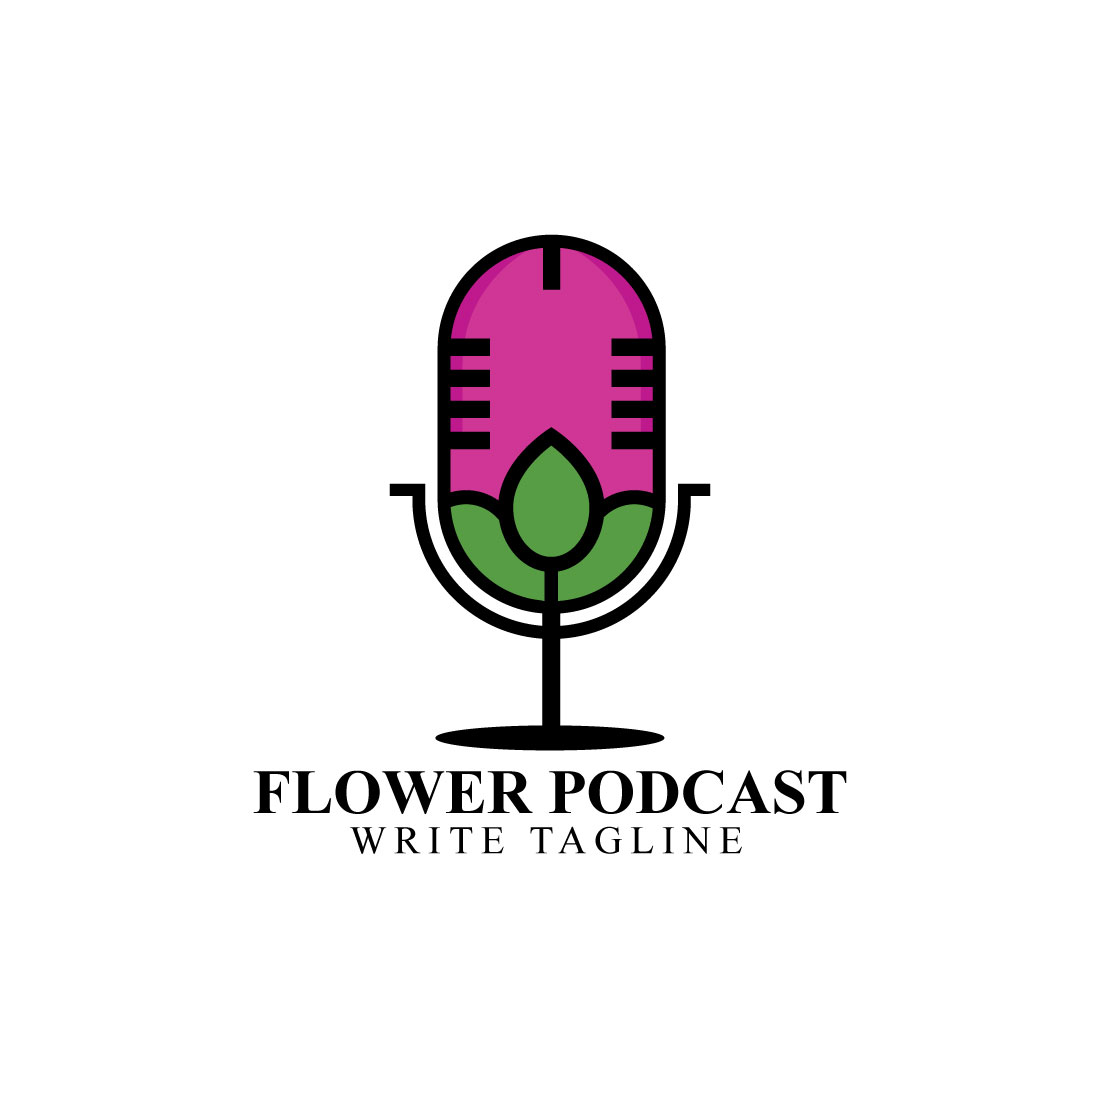 Flower podcast logo design vector template cover image.